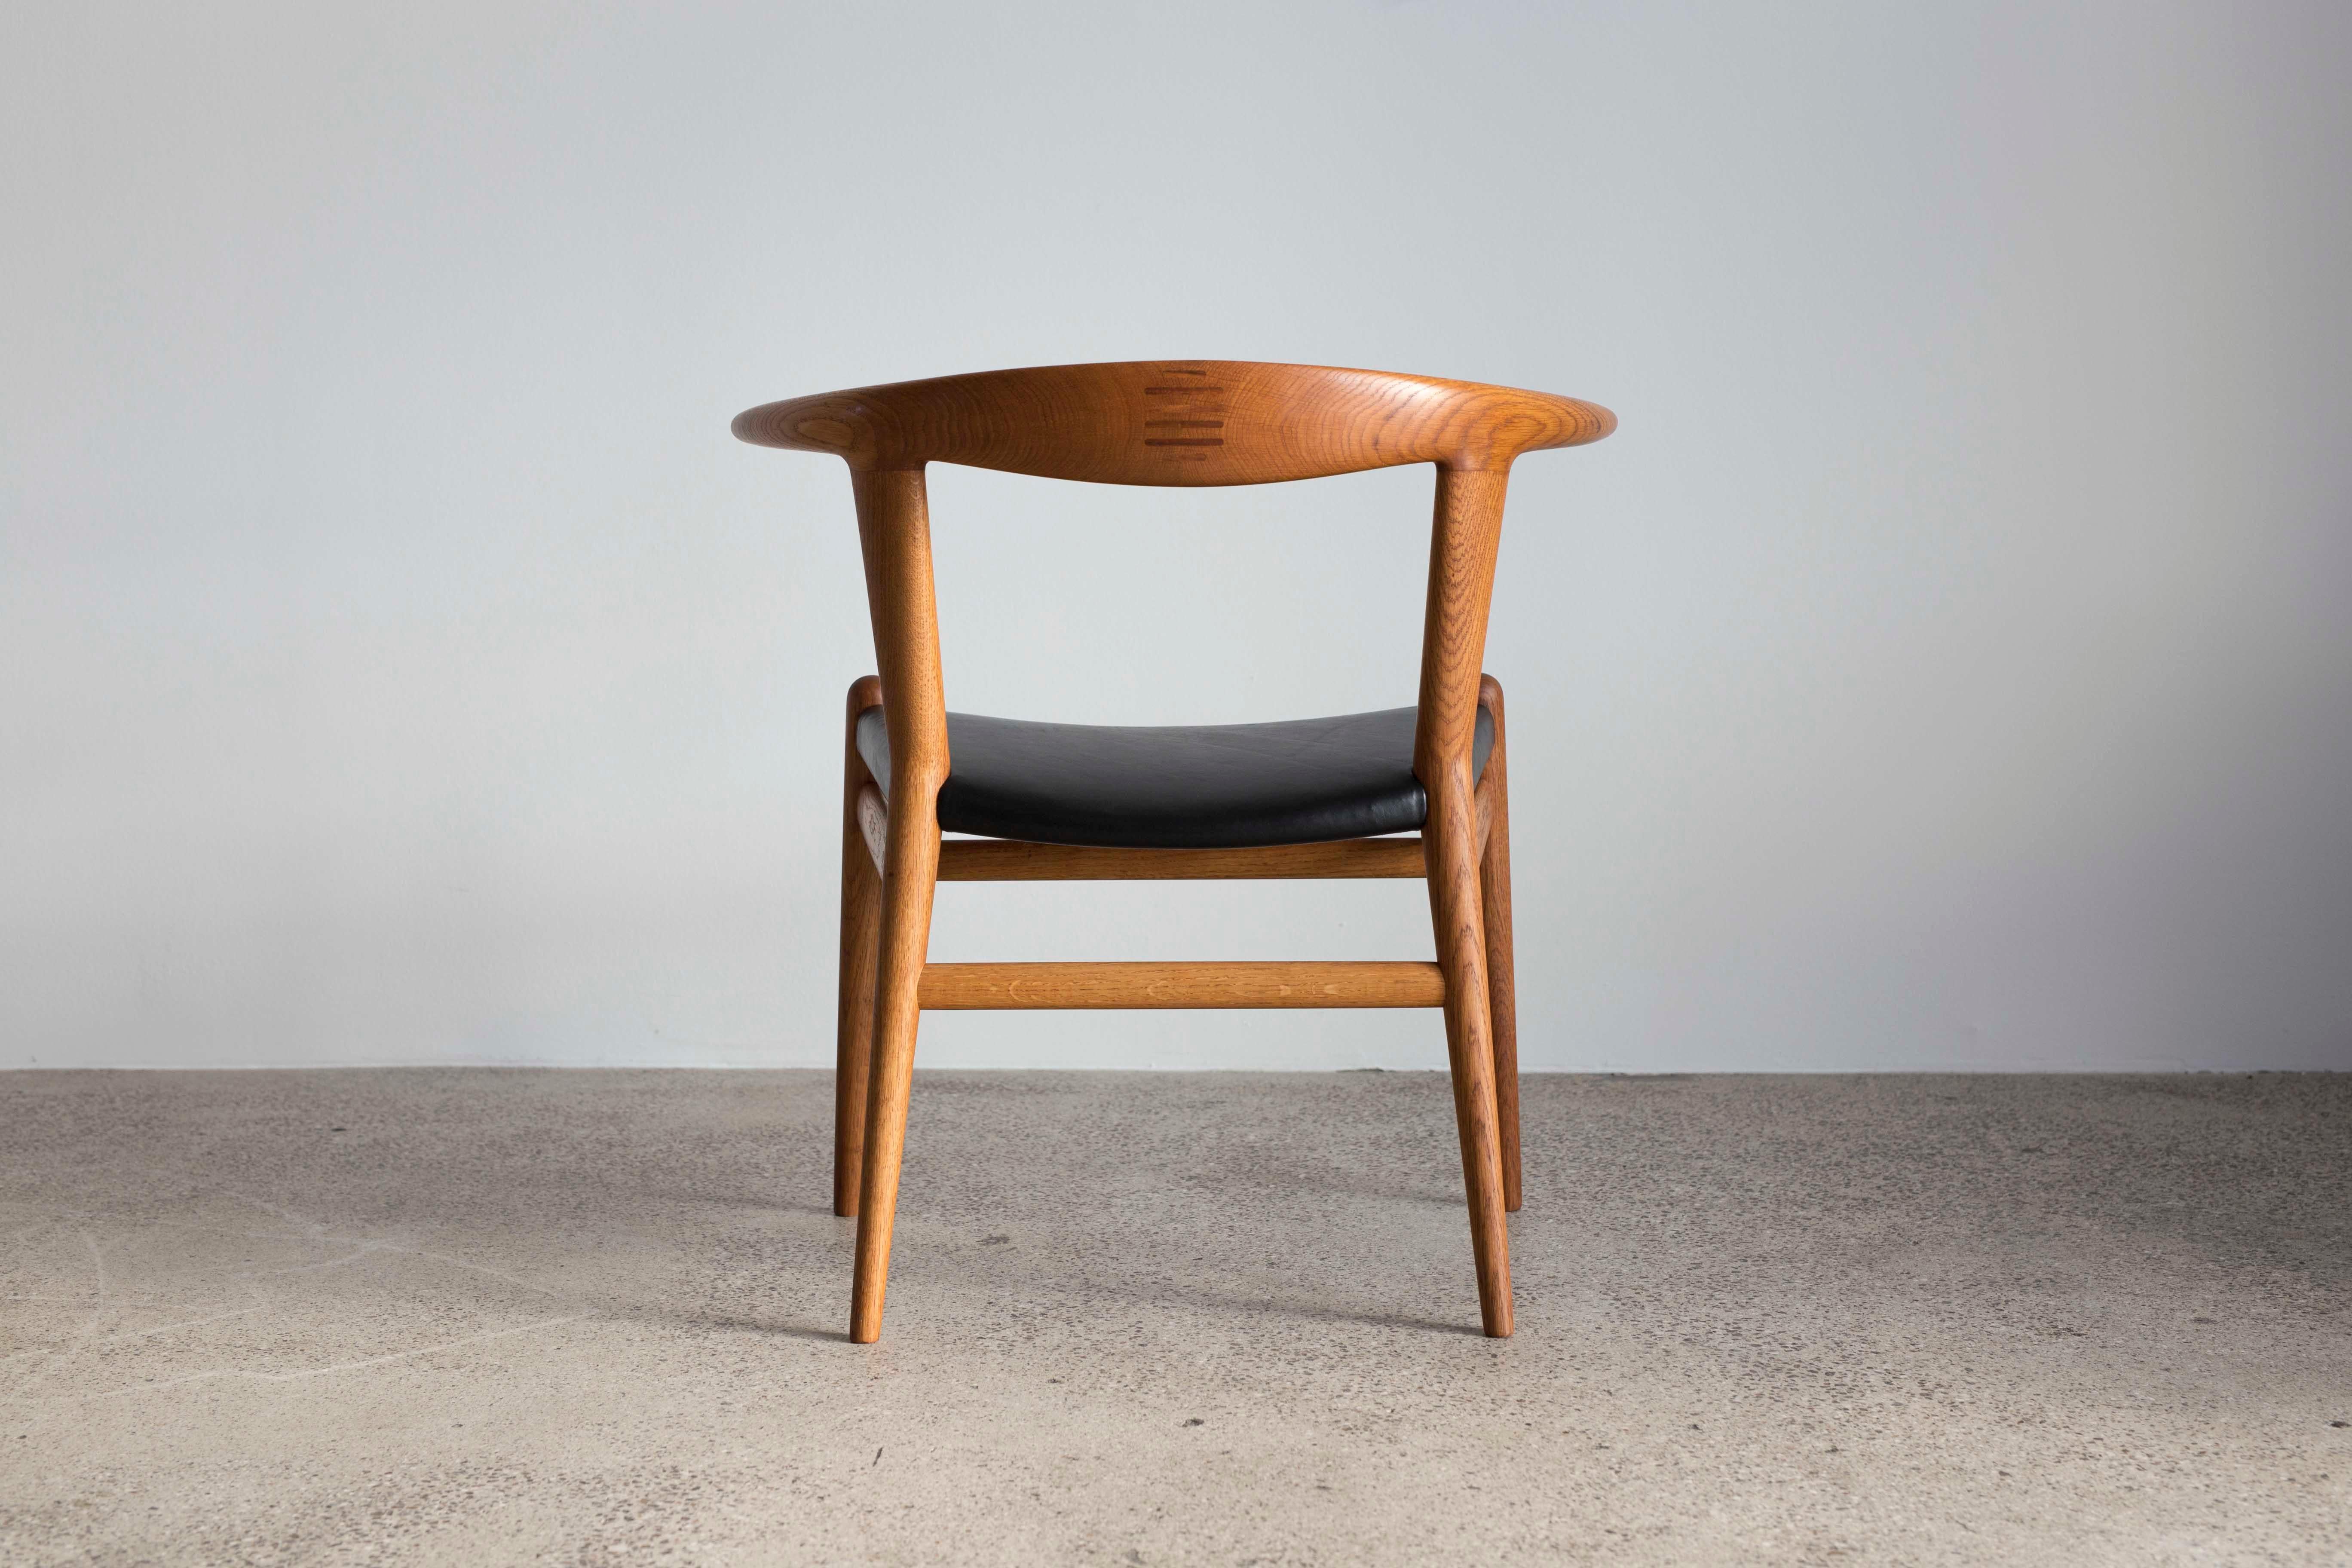 Hans J. Wegner 'Bull Chair' with frame of solid oak and black leather seat.
Designed by Hans J. Wegner 1961, made and marked by cabinetmaker Johannes Hansen, Denmark Model JH 518.